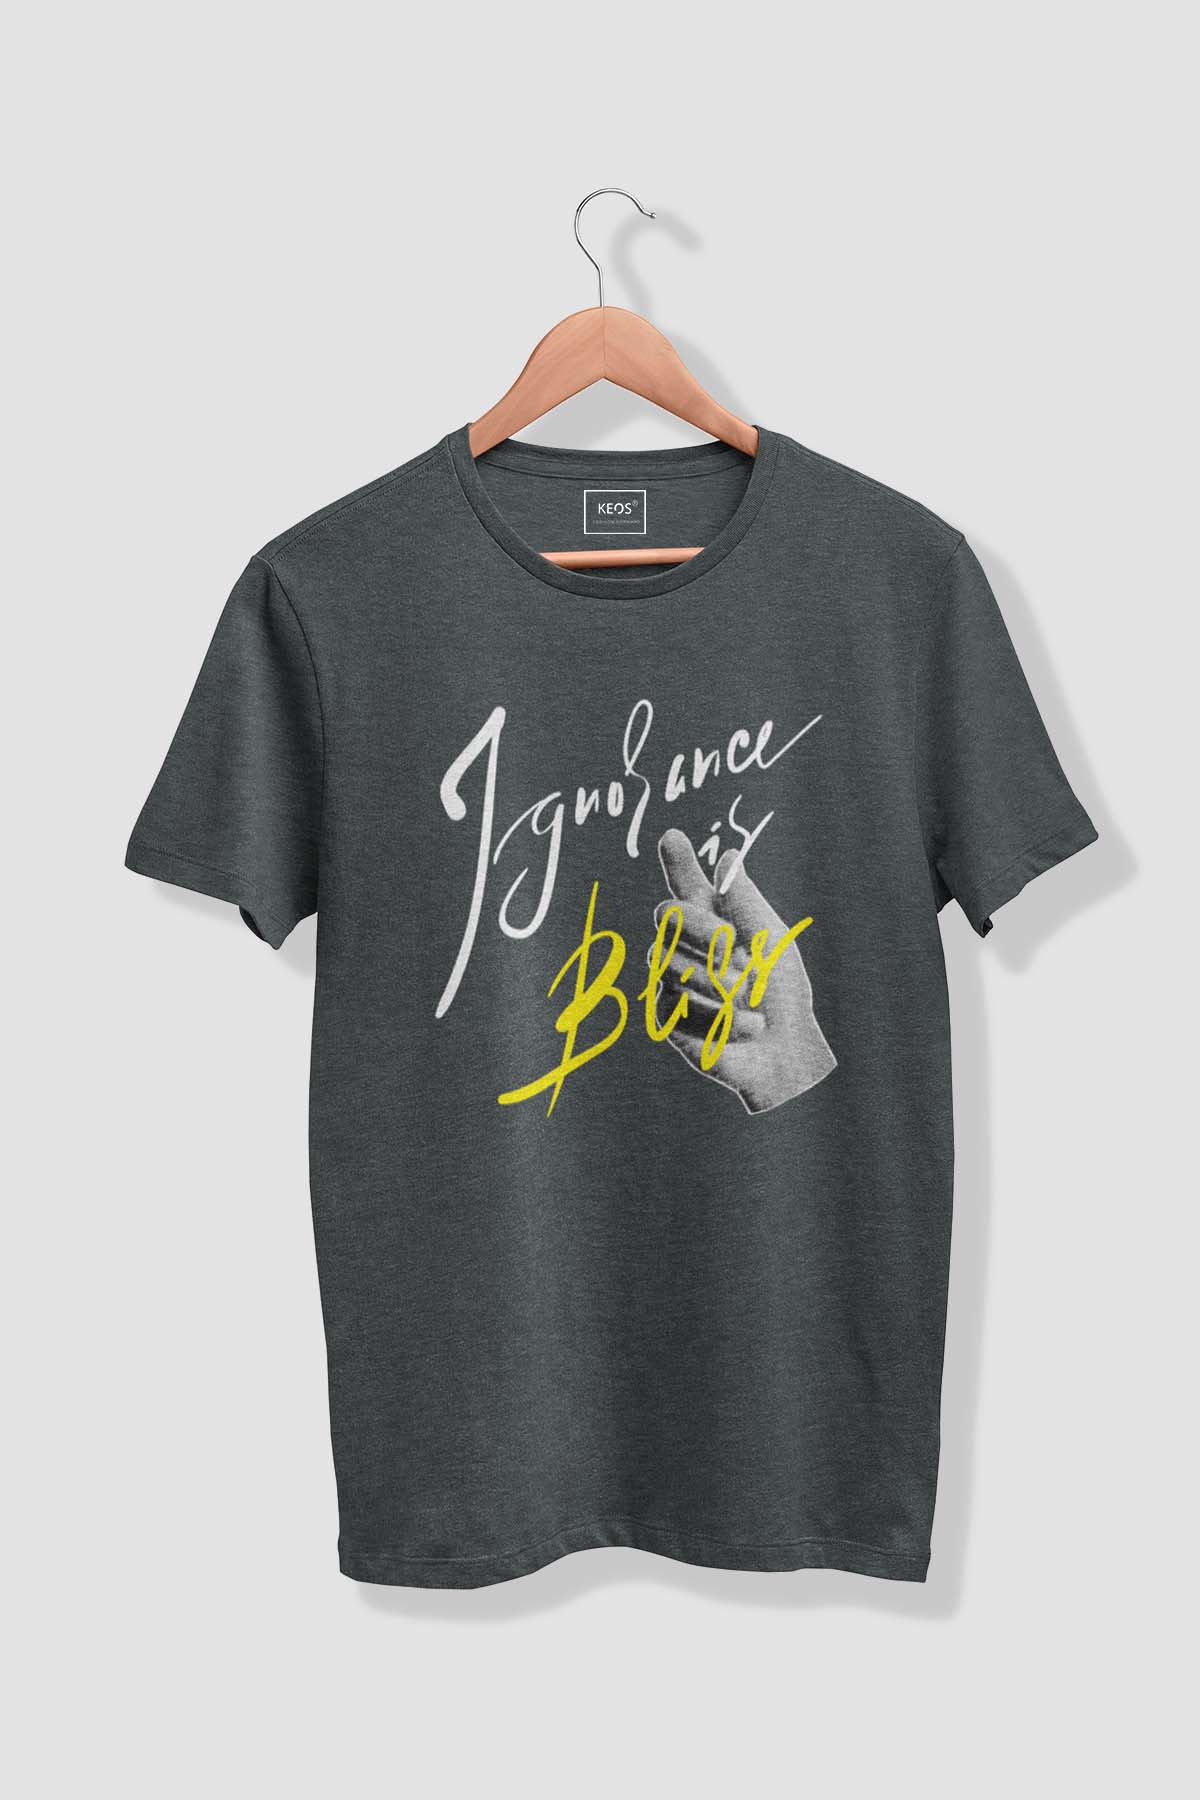 Ignorance is Bliss - Melange Cotton T-shirt - keos.life